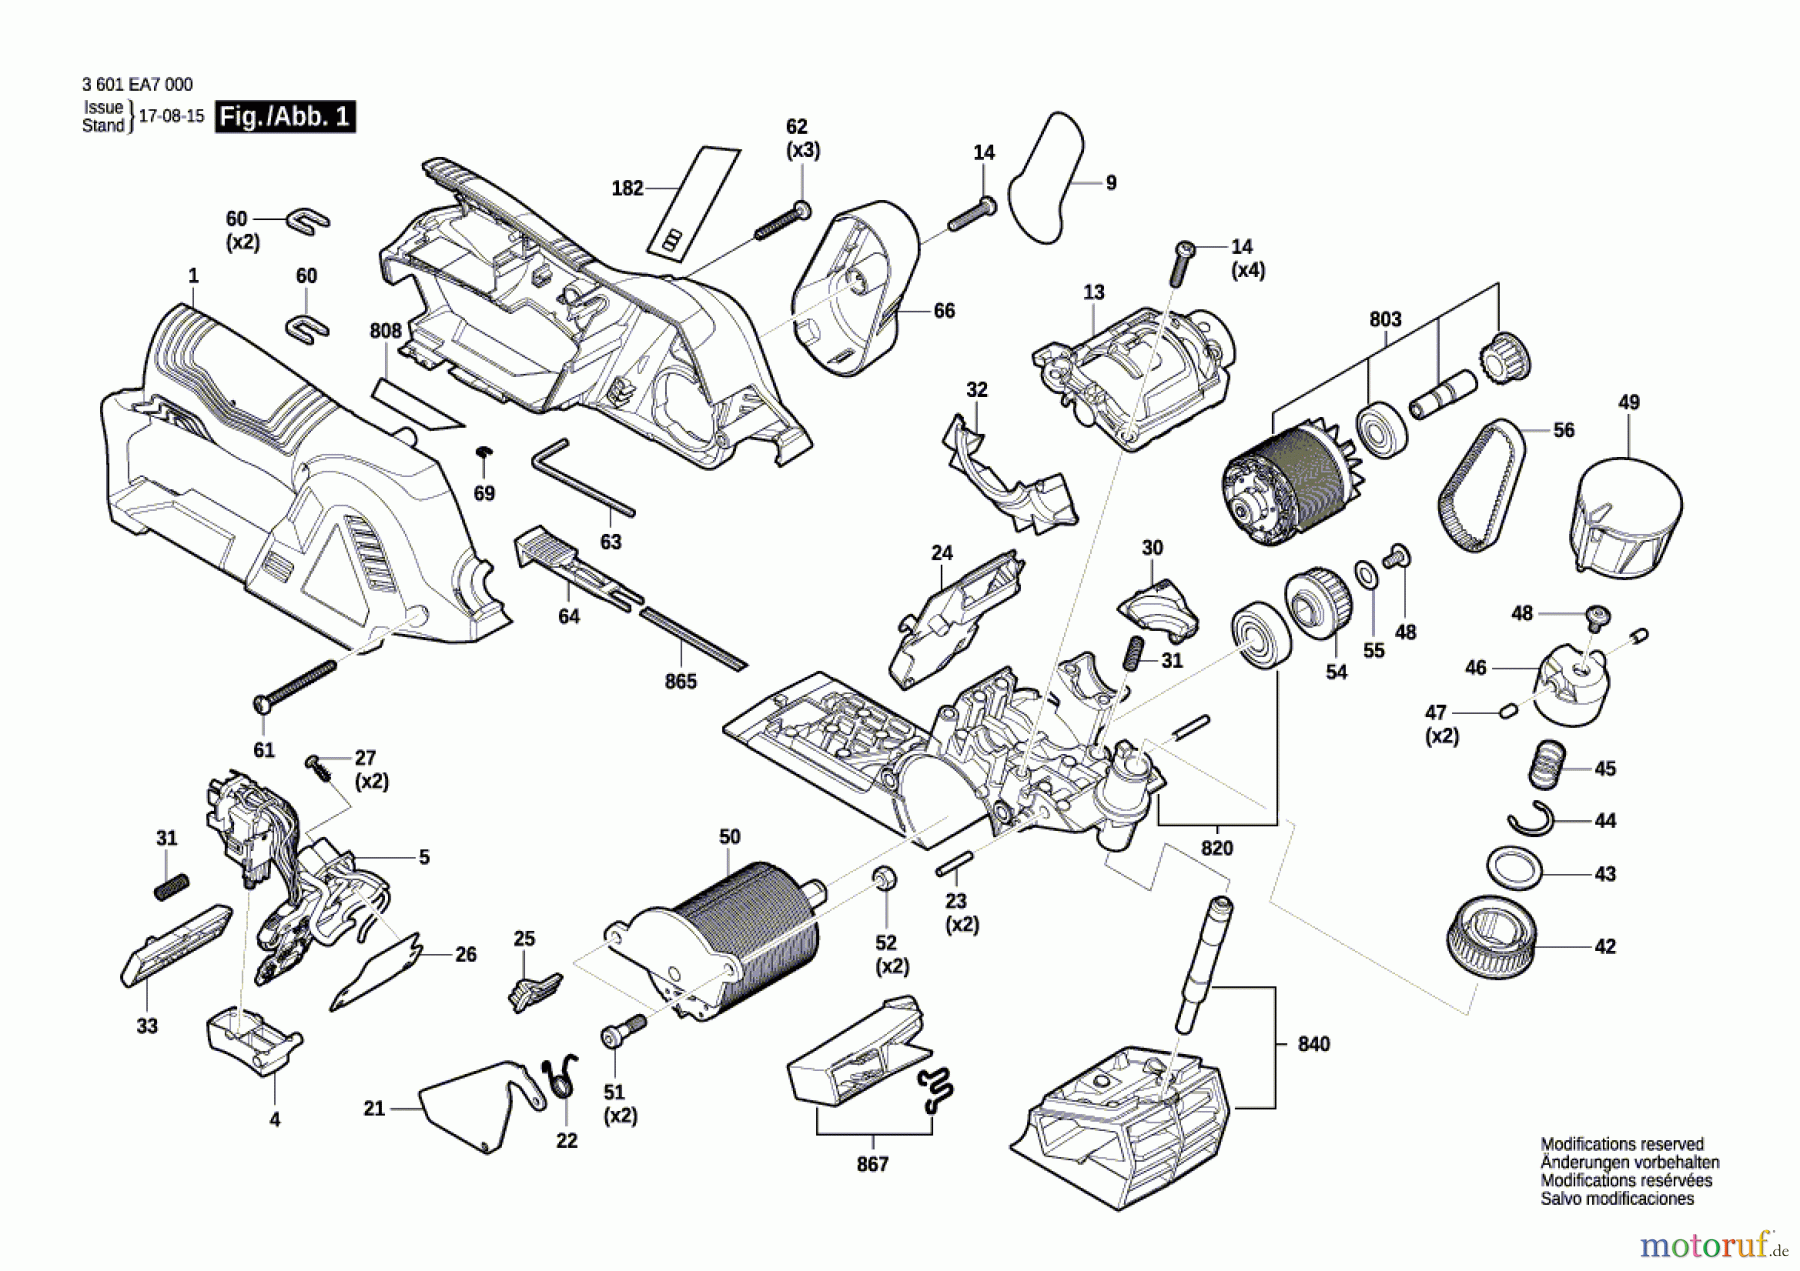  Bosch Werkzeug Handhobel GHO 12V-20 Seite 1